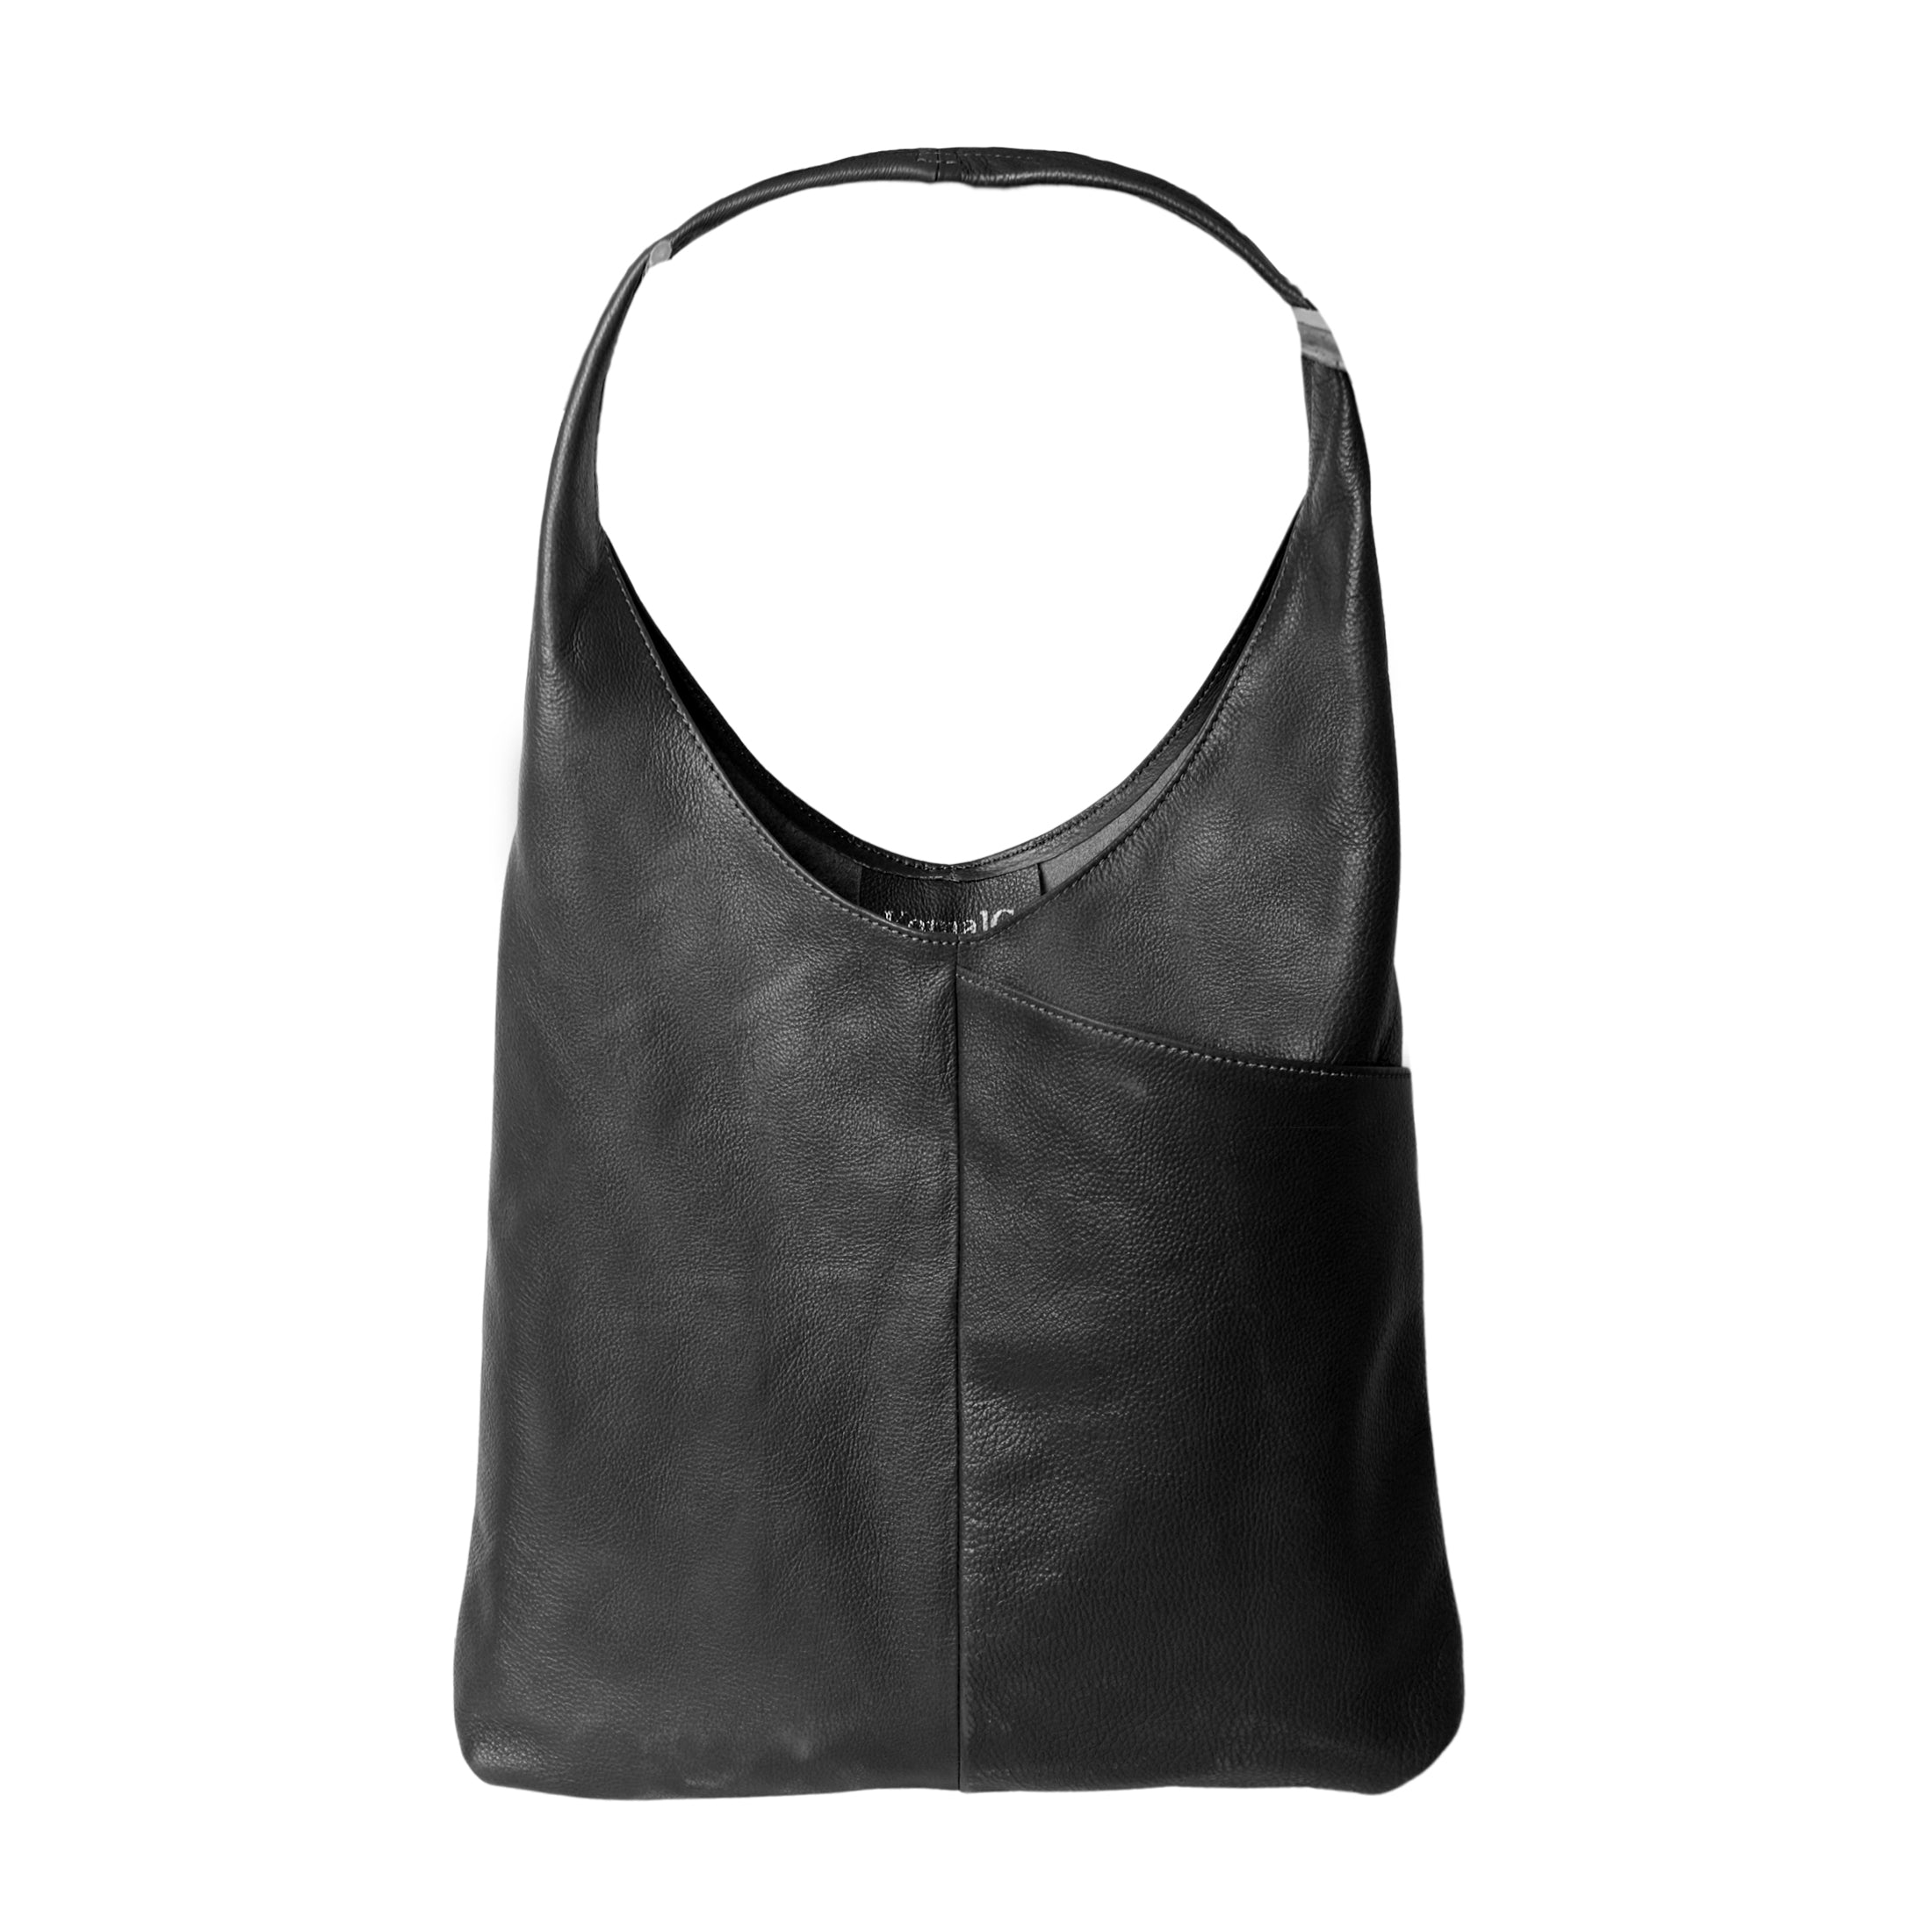 BLACK TRADITION Grey Hand-held Bag Finland stylie PU-Leather Ladies purse/ Handbag, designer leather hand bag brown - Price in India | Flipkart.com